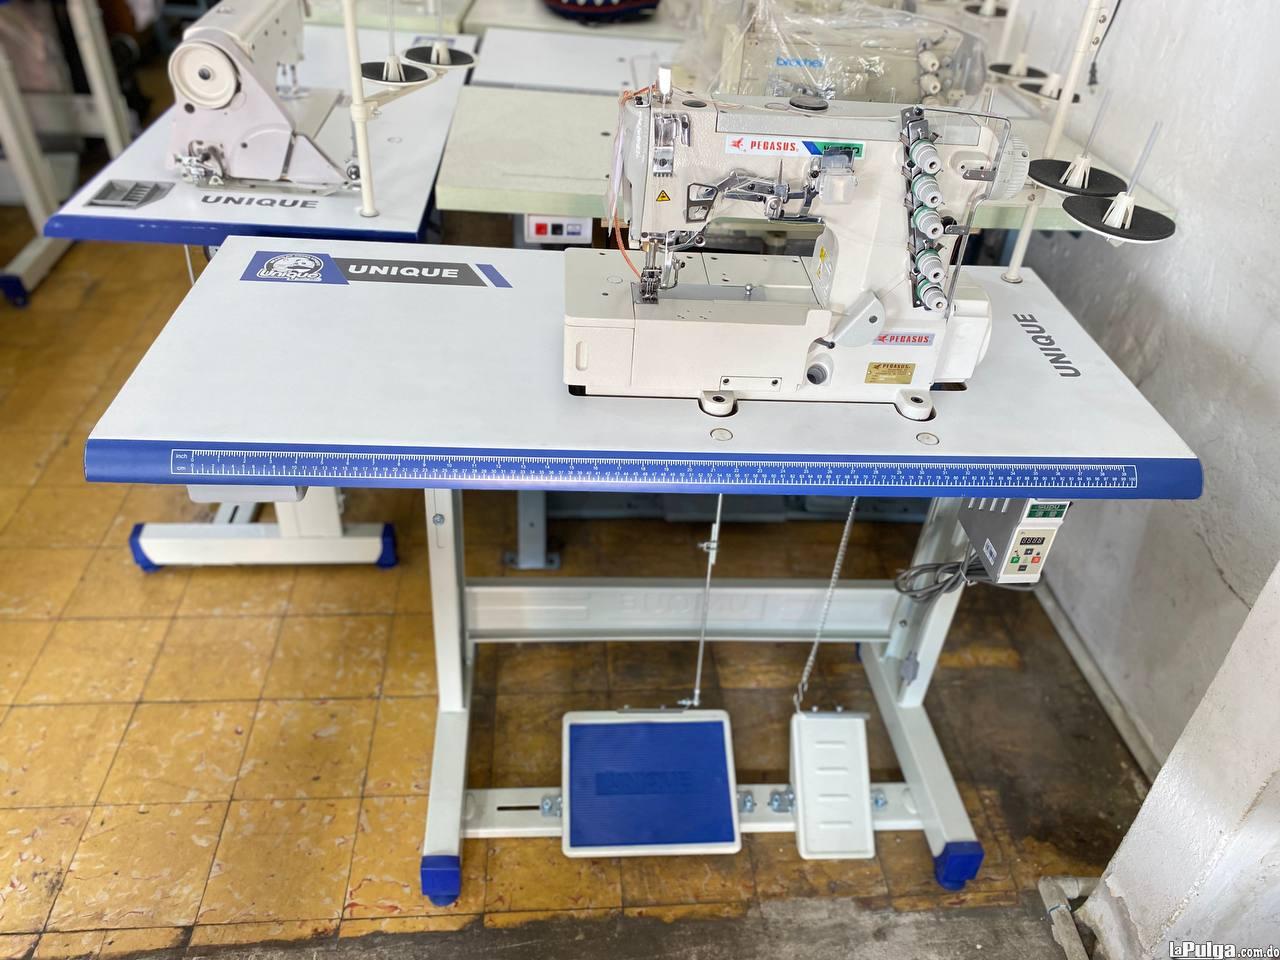 maquina de coser industrial full cover pegasus W500 interlock Nueva Foto 7142518-5.jpg